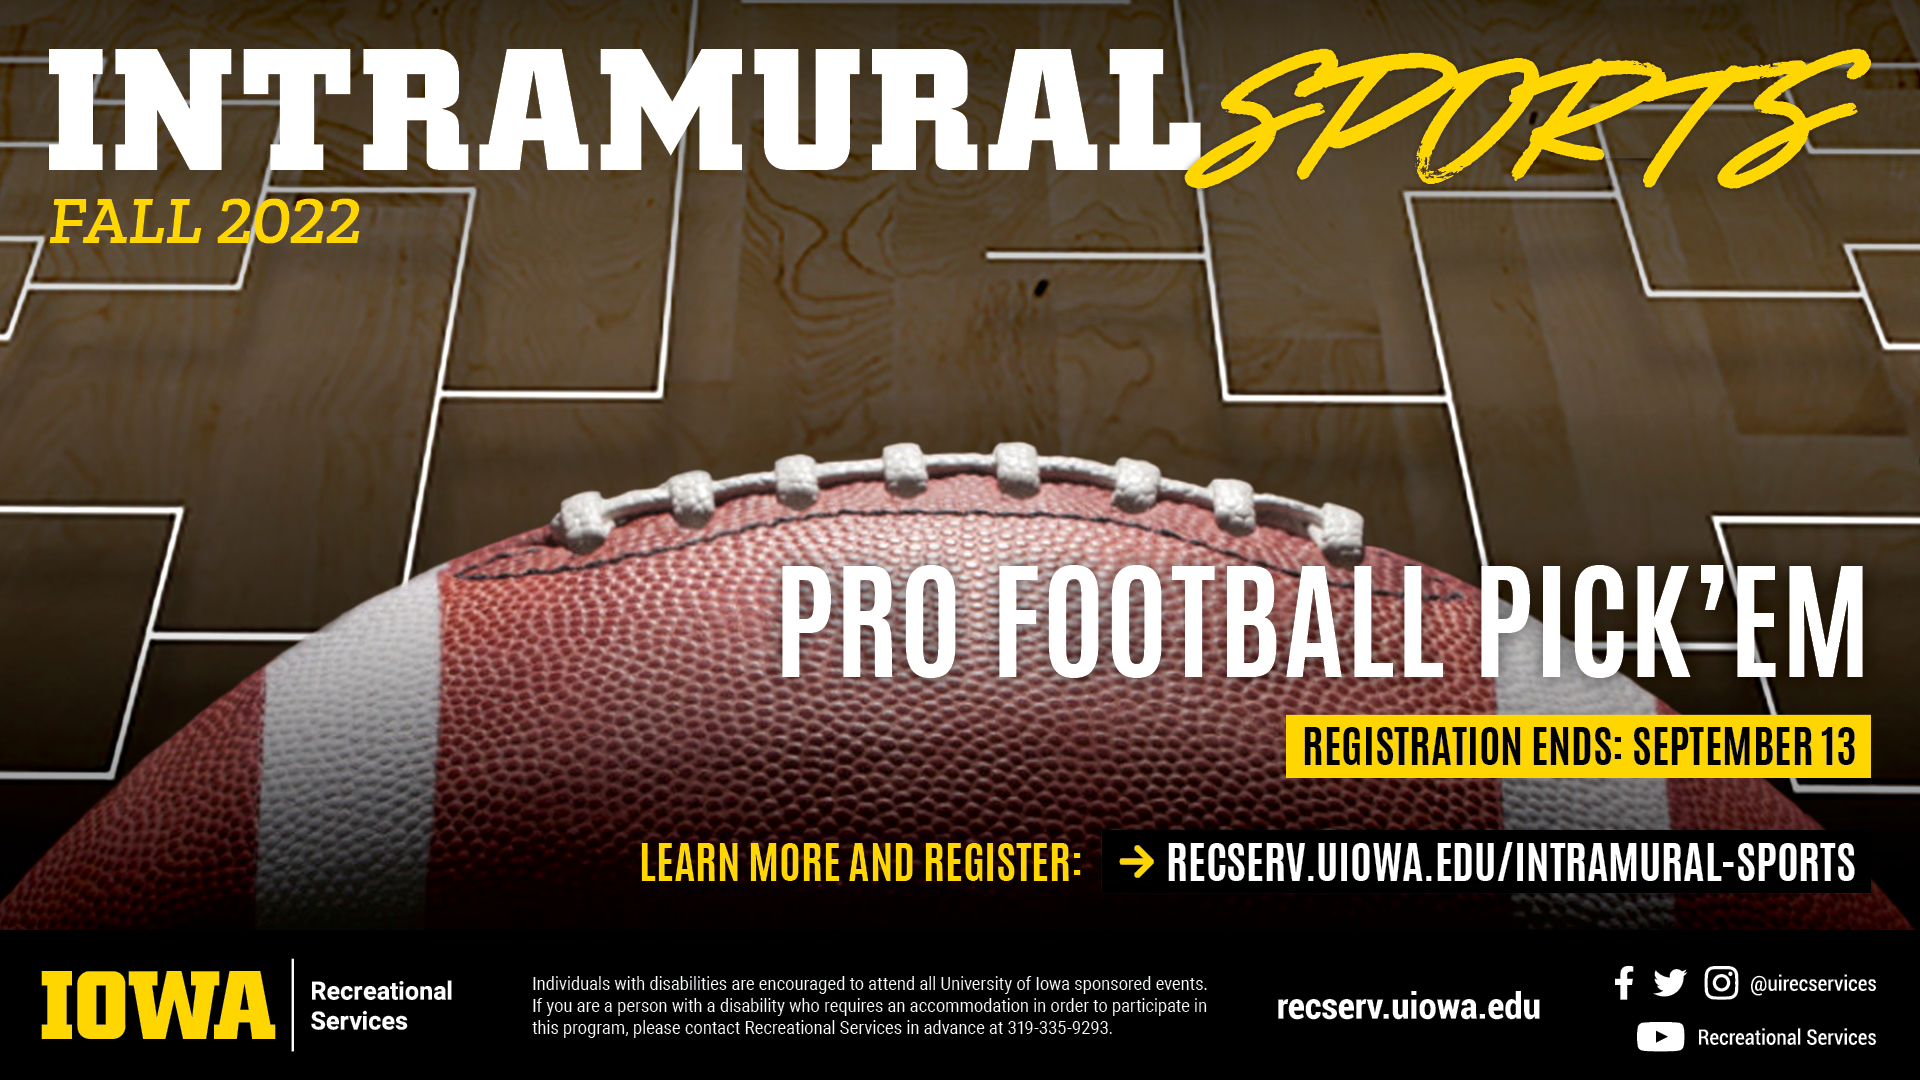 Intramural Sports Fall 2022: Pro Football Pick Em. Learn more and register at reserv.uiowa.edu/intramural-sports